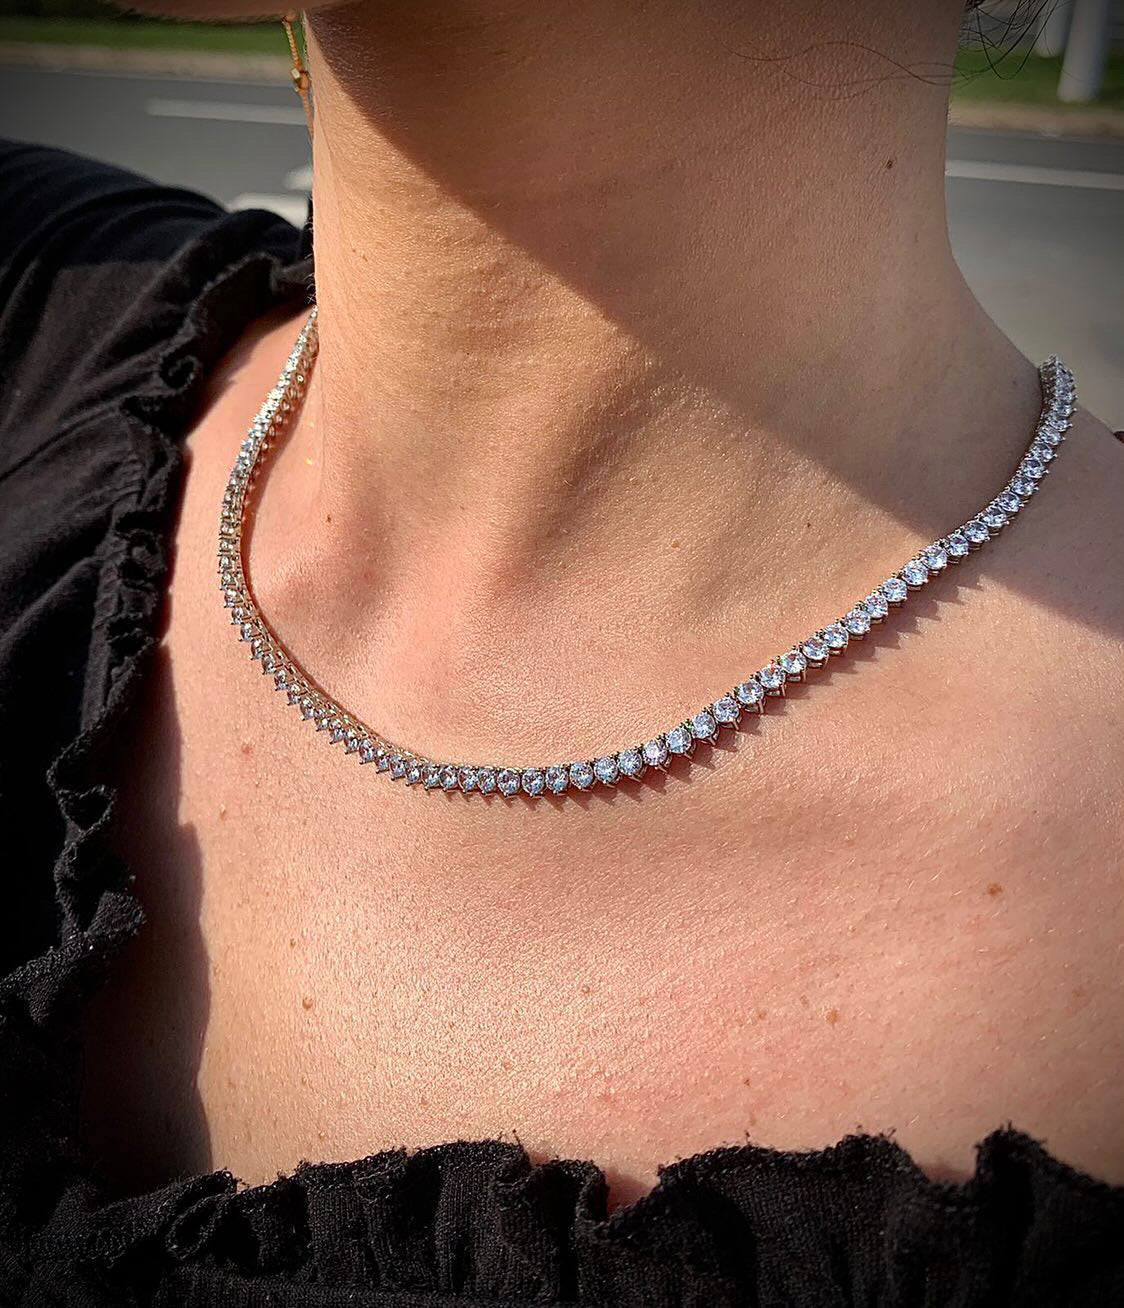 Tennis necklace 3mm silver color